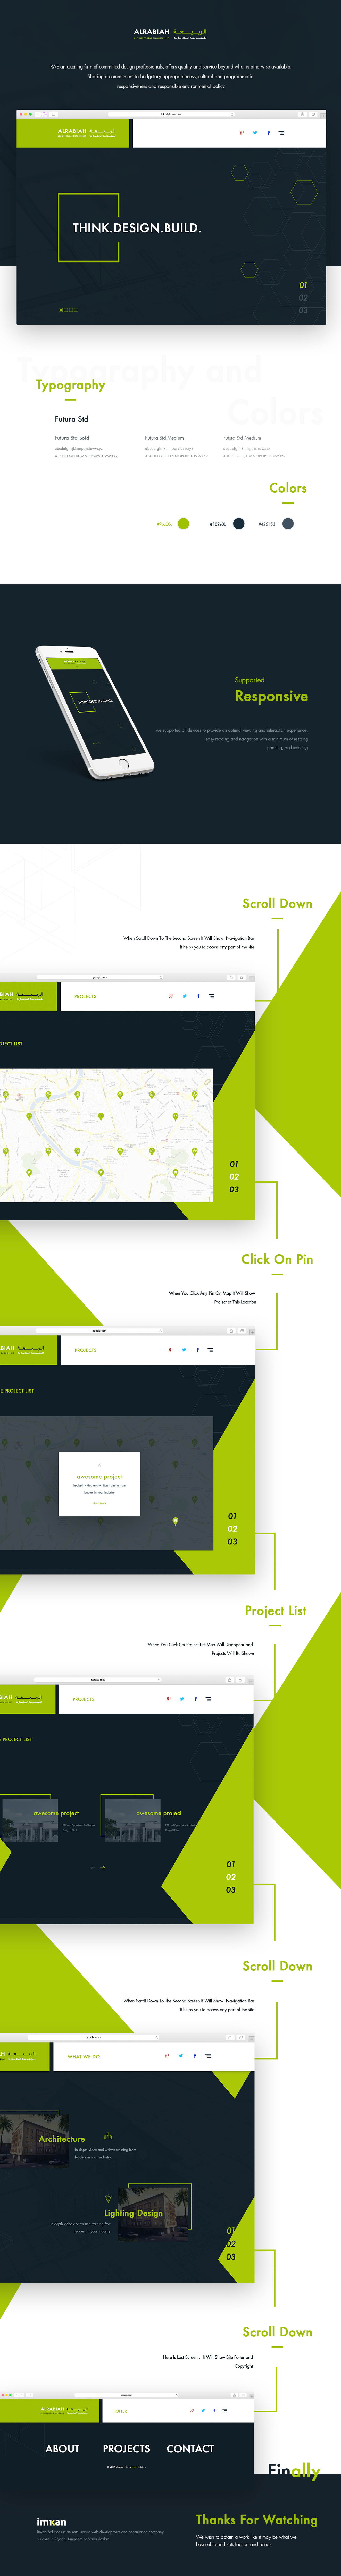 ux UI Web site design template home page